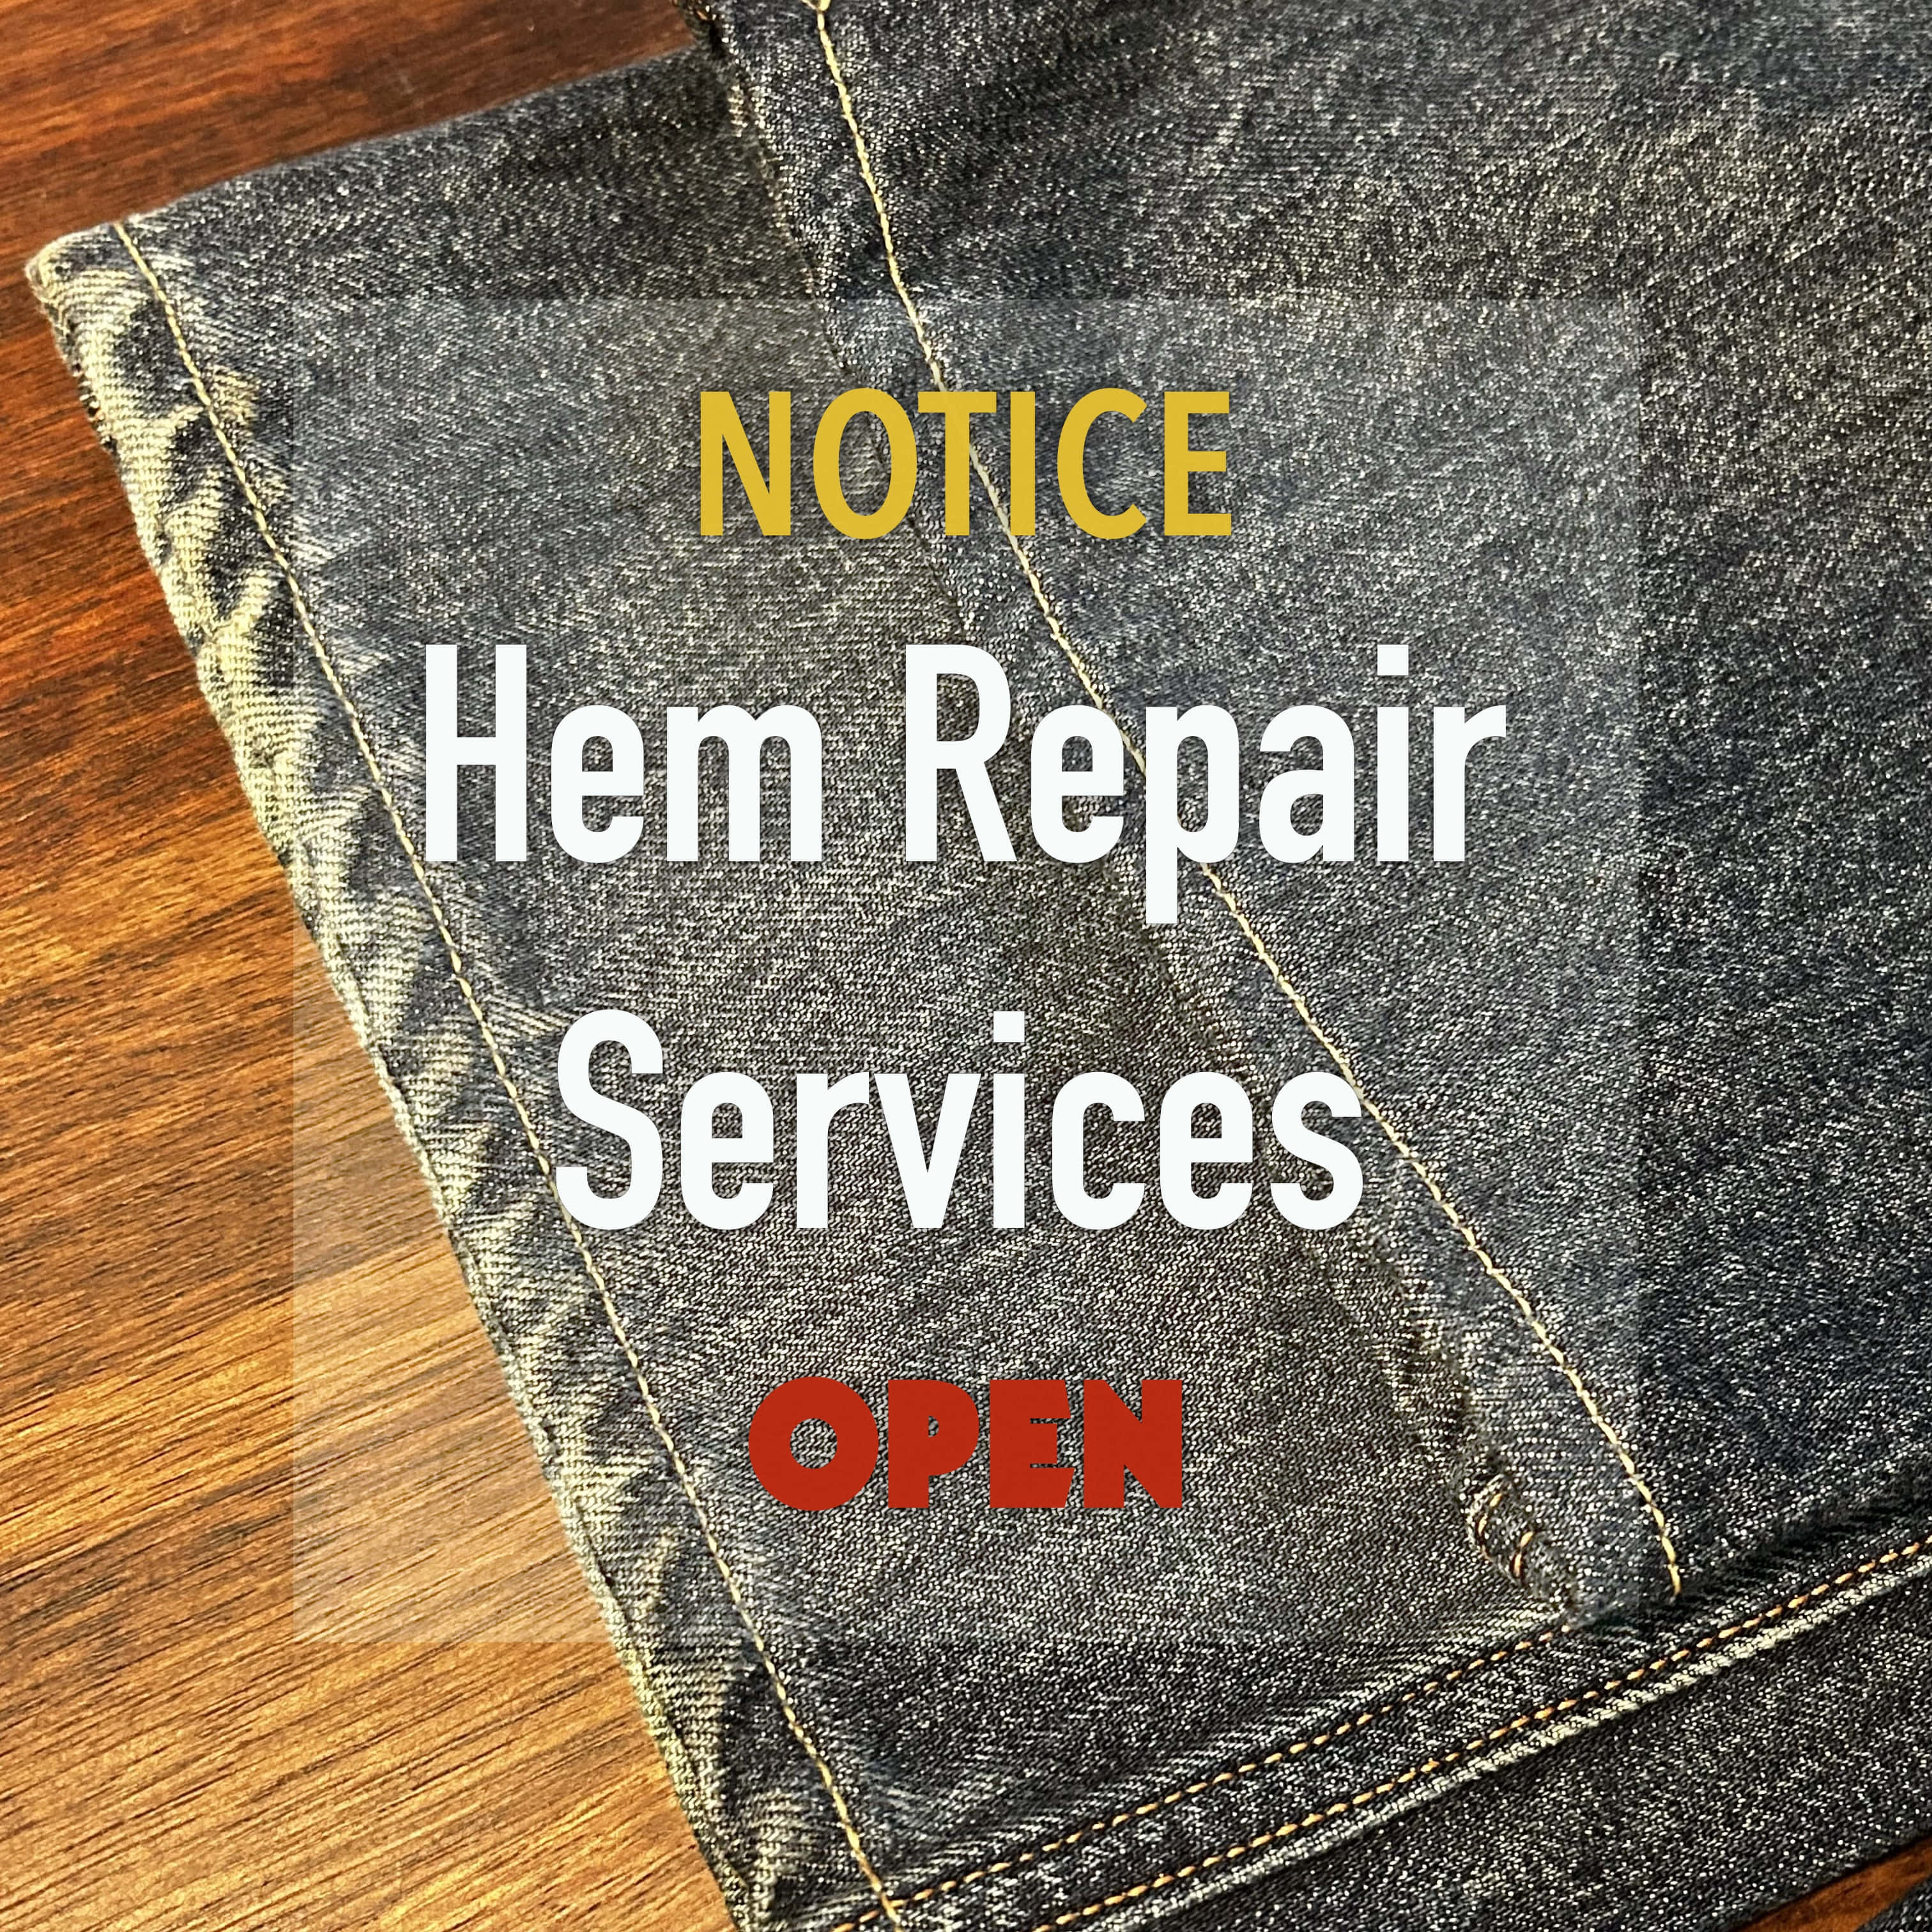 Hem Repair Services